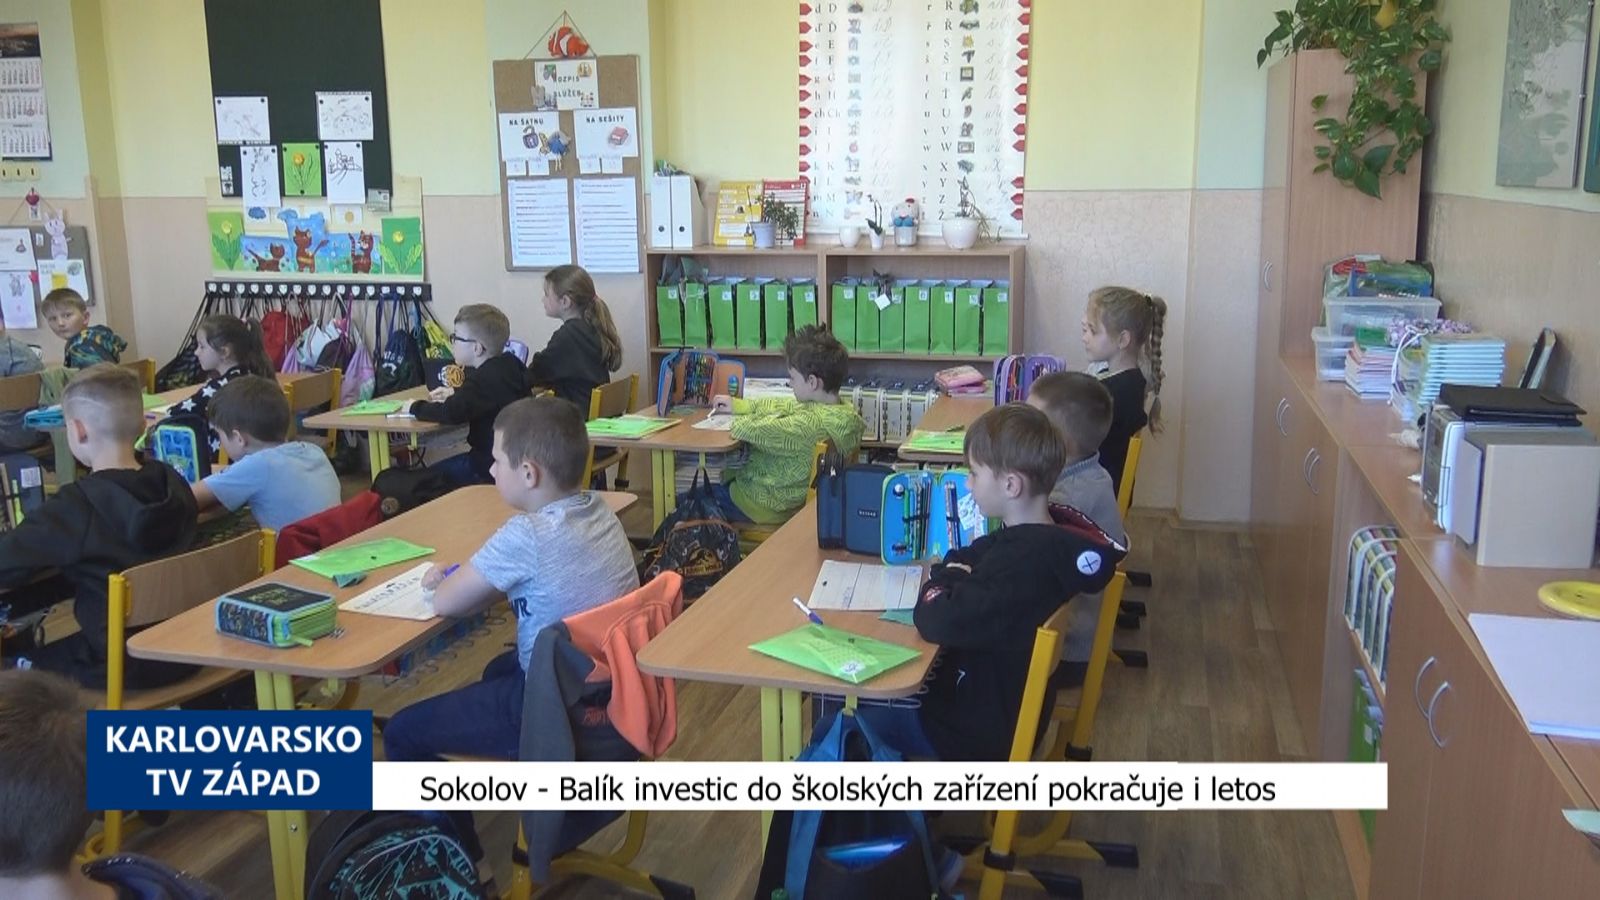 Sokolov: Balík investic do školských zařízení pokračuje i letos (TV Západ)